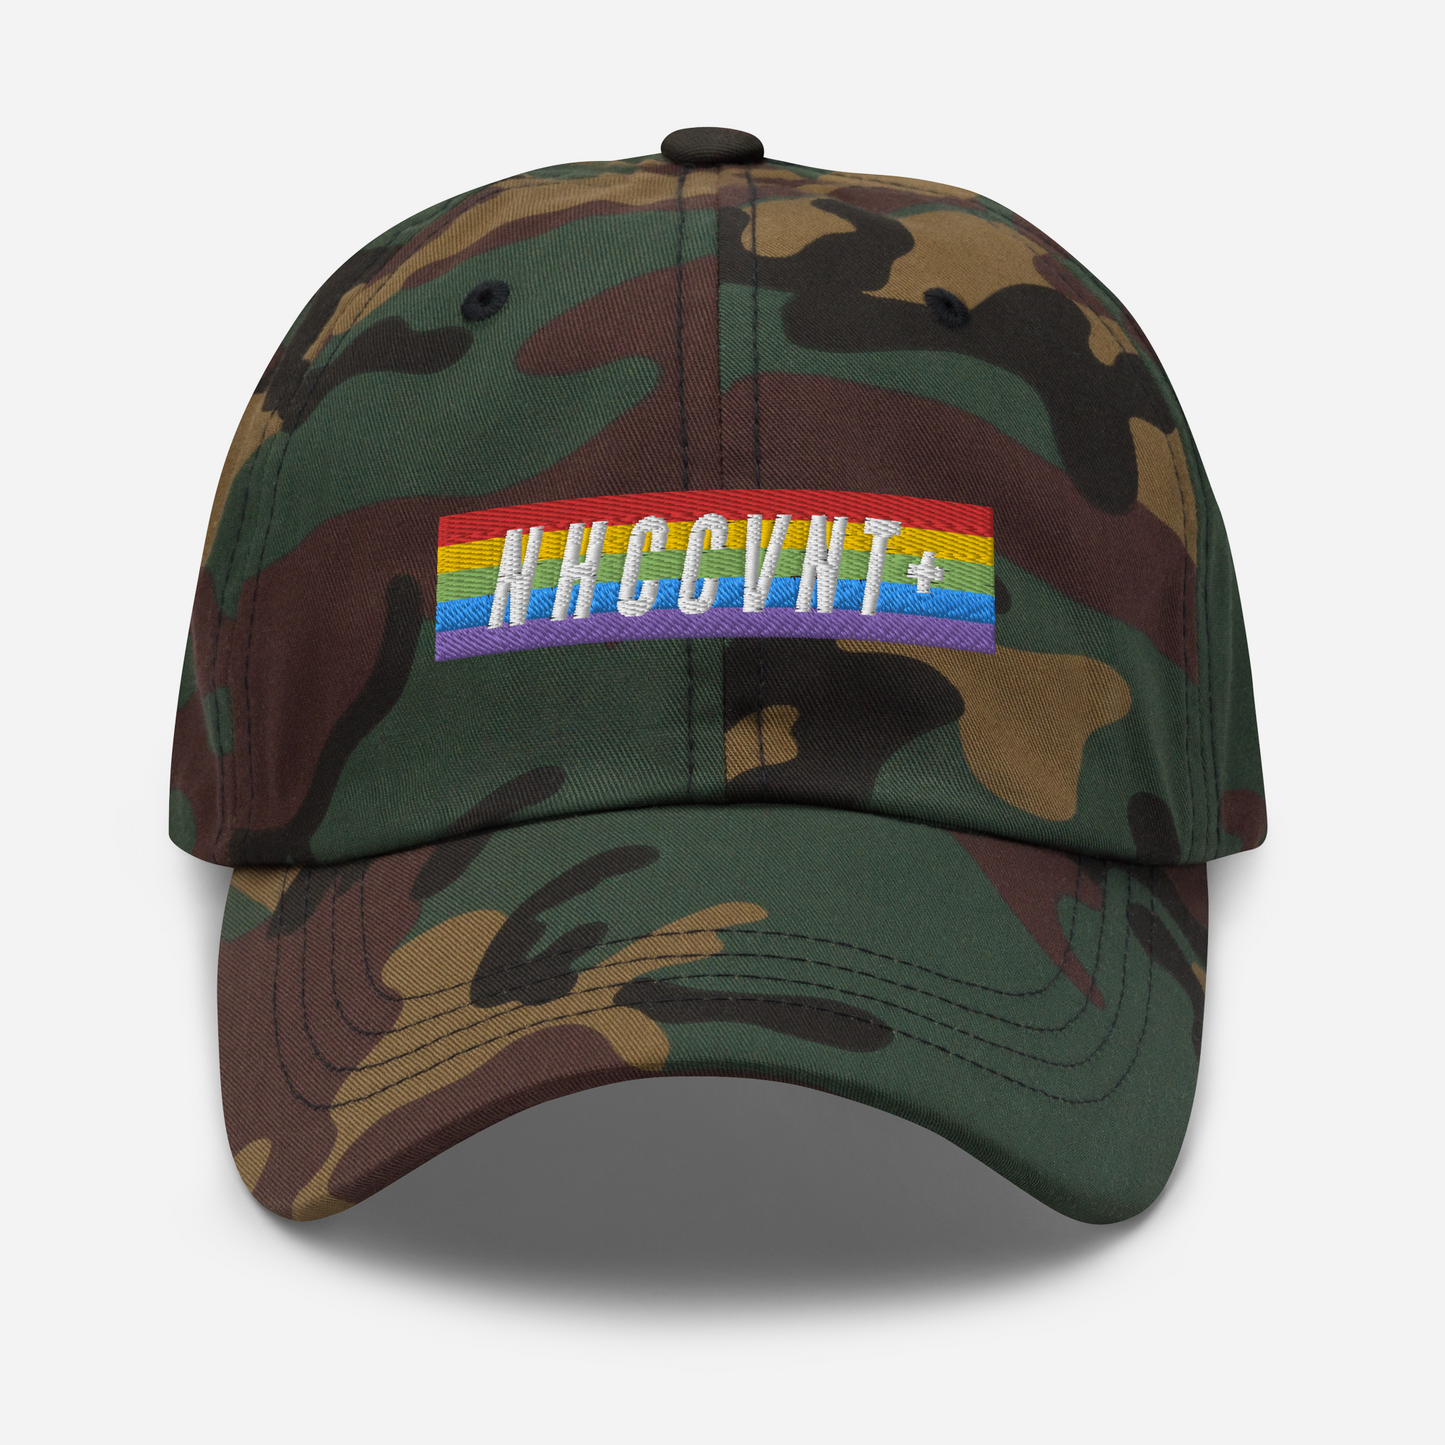 NHCCVNT+ Baseball Hat